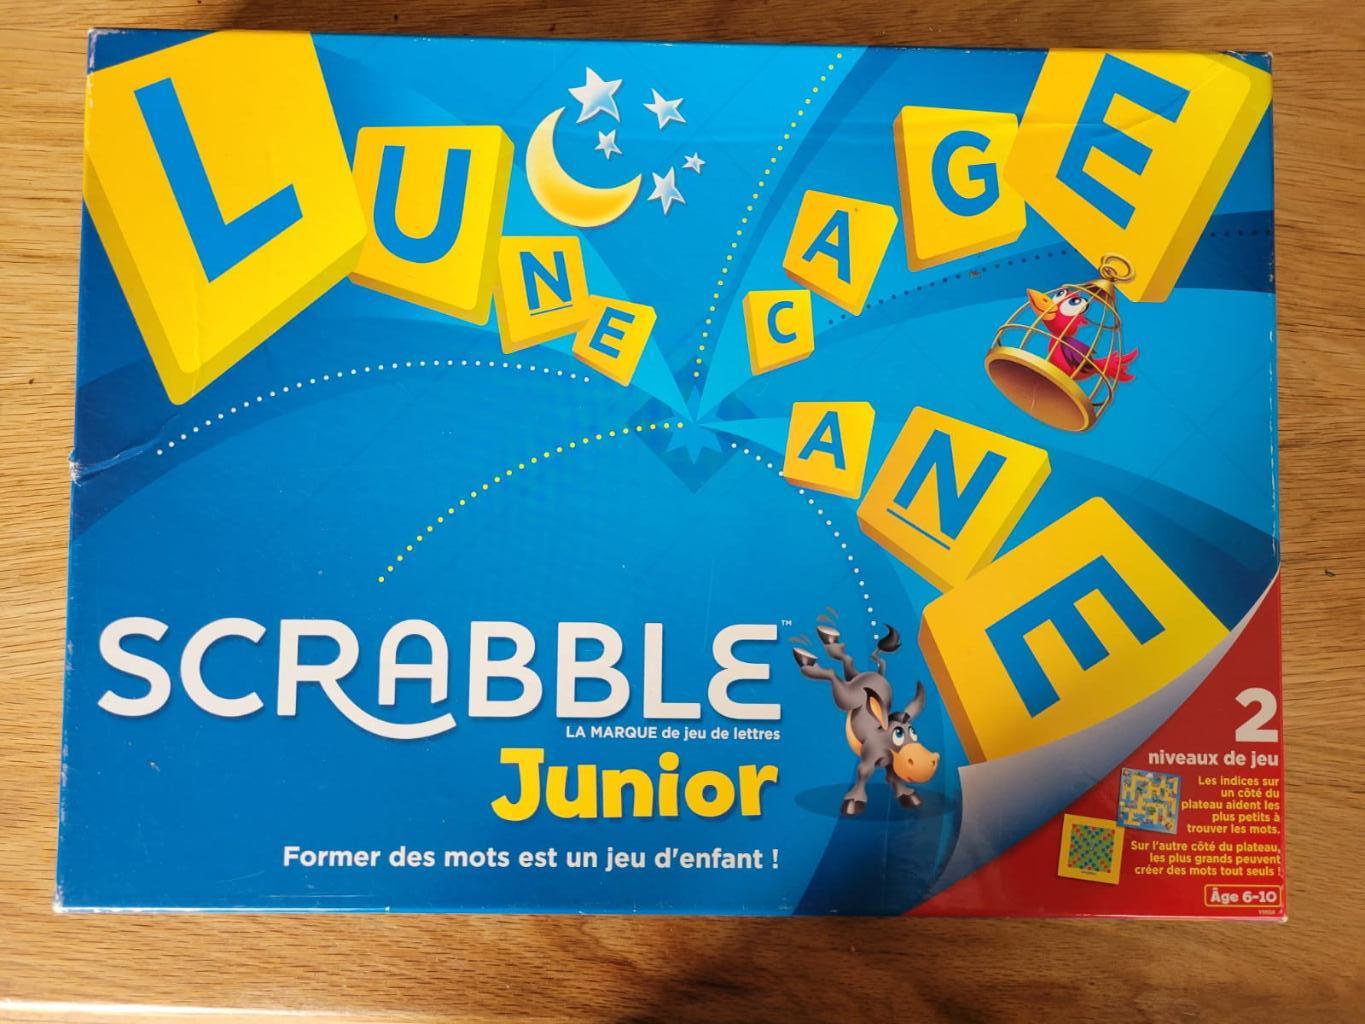 Acheter Scrabble Junior d'occasion sur Okkazeo - Acheter sur Okkazeo